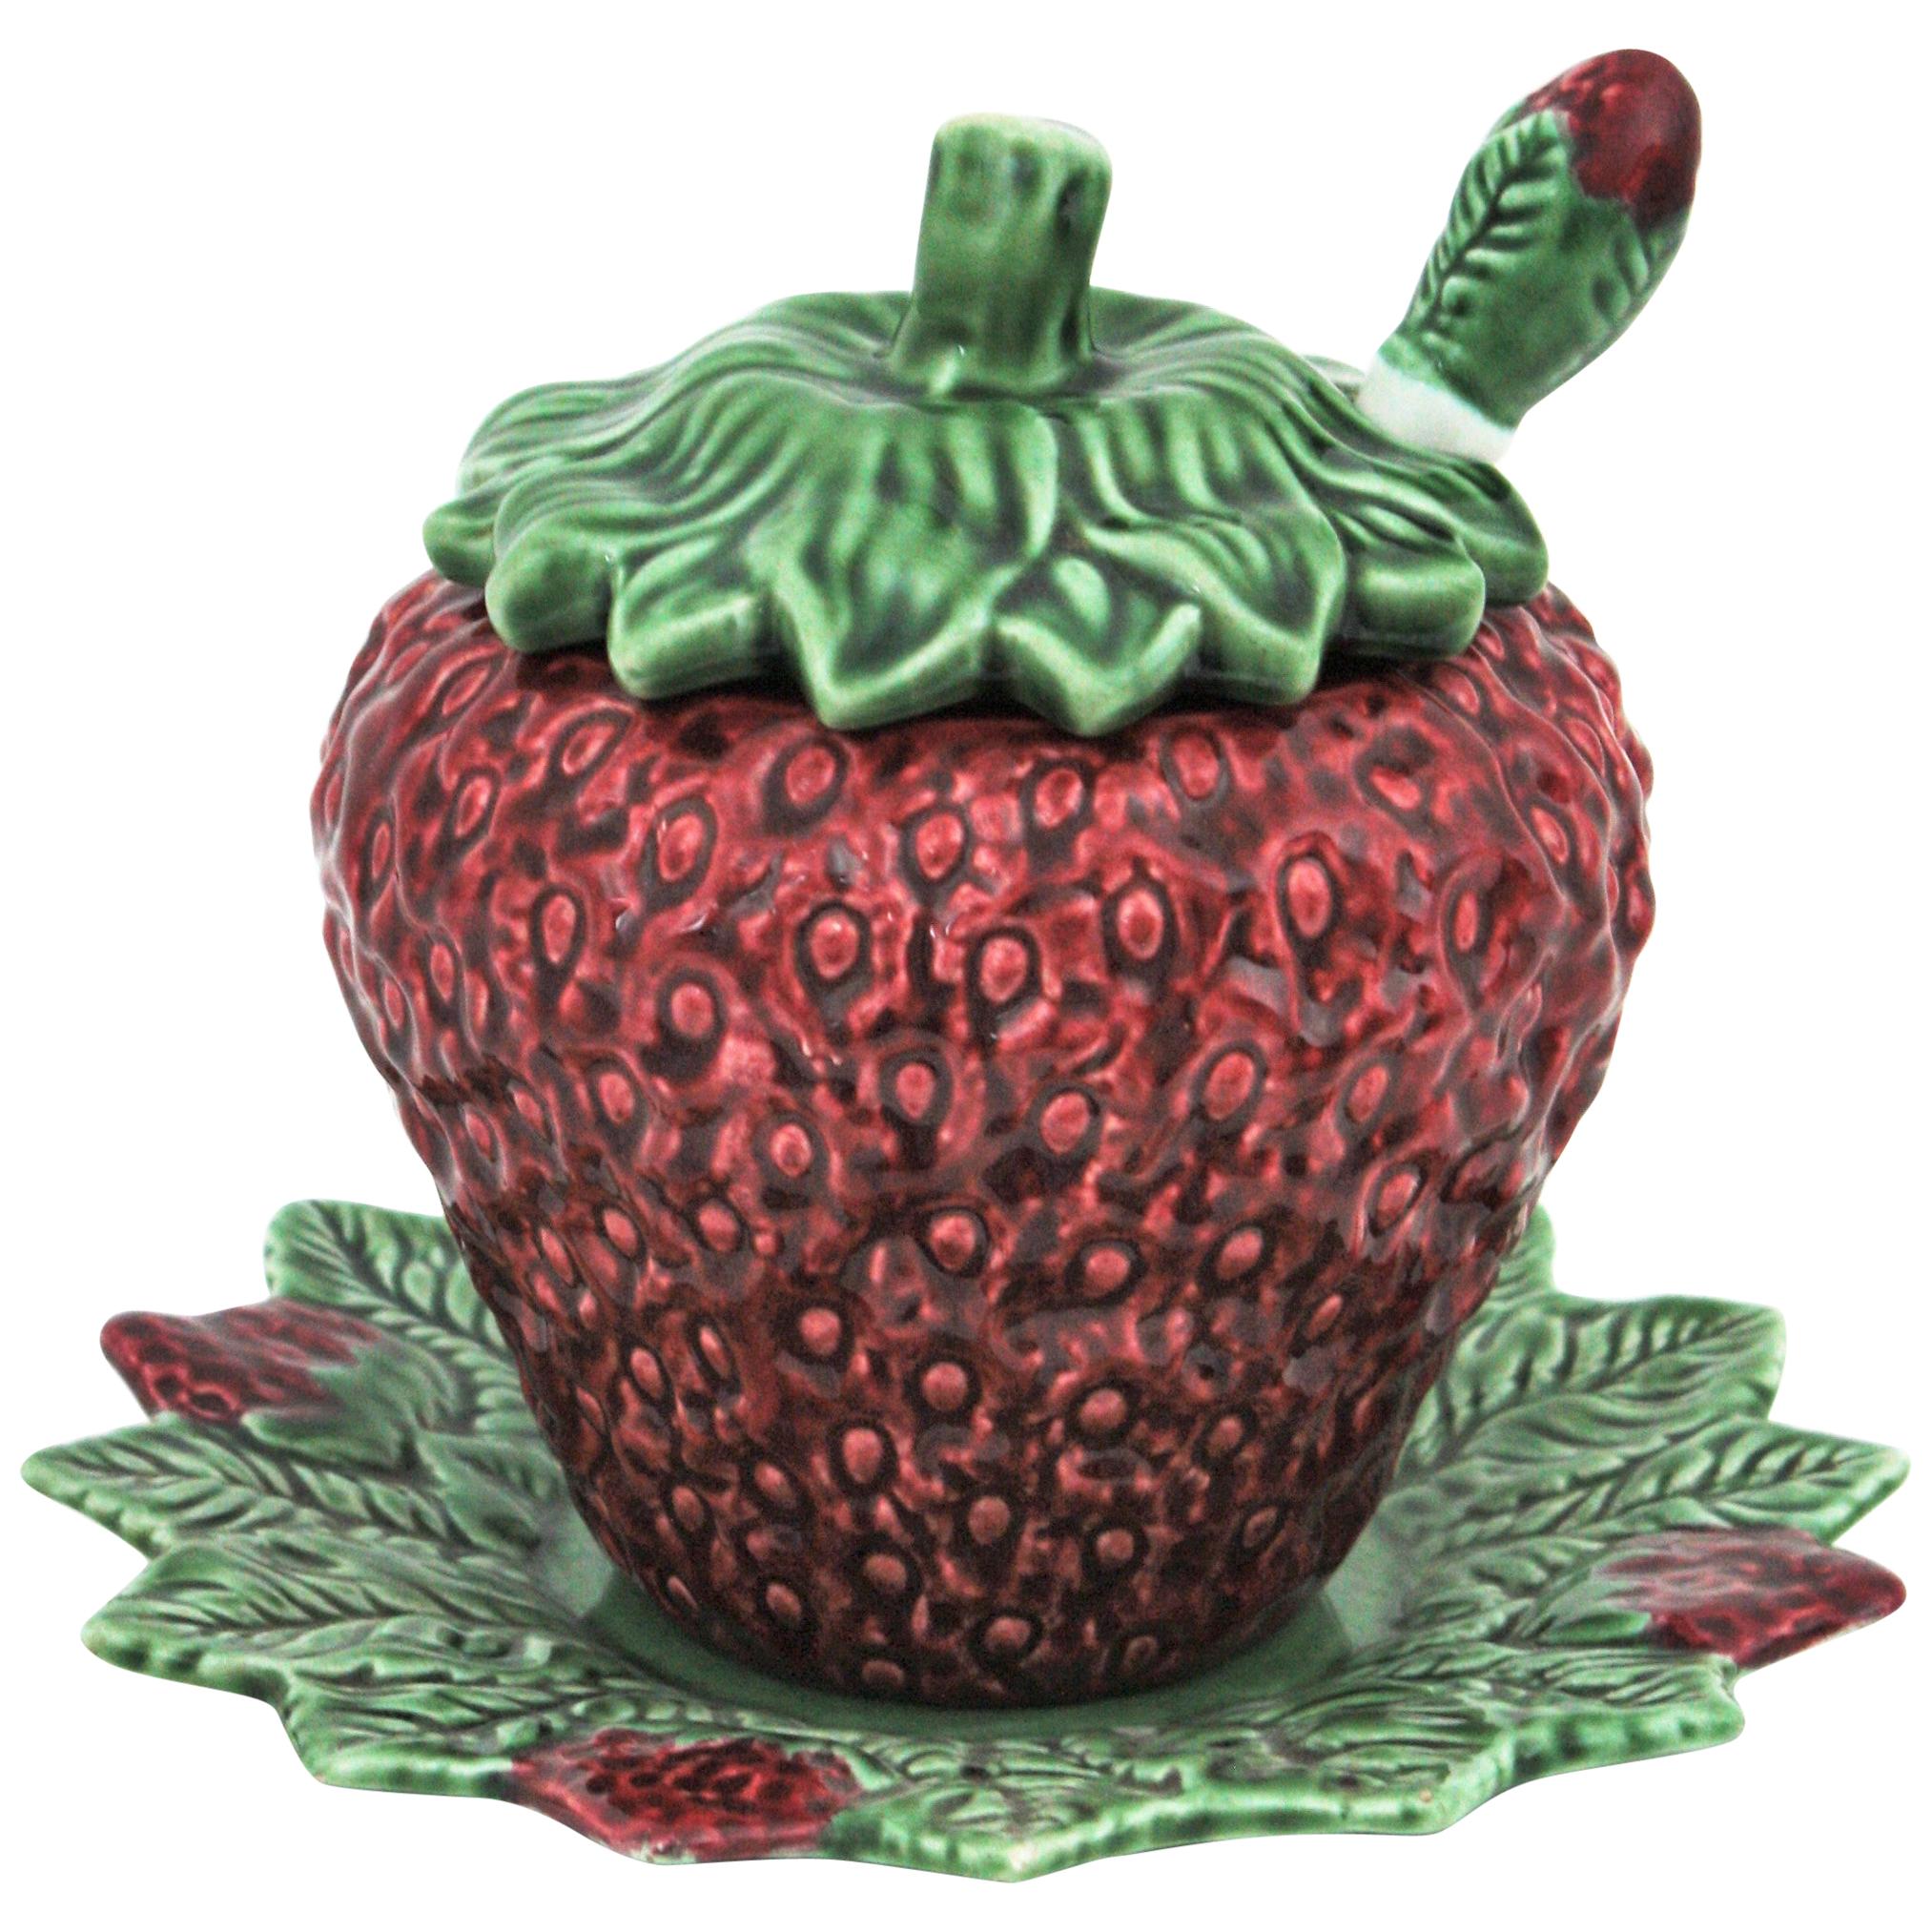 Strawberry Shaped Majolica Ceramic Tureen by Bordalo Pinheiro For Sale